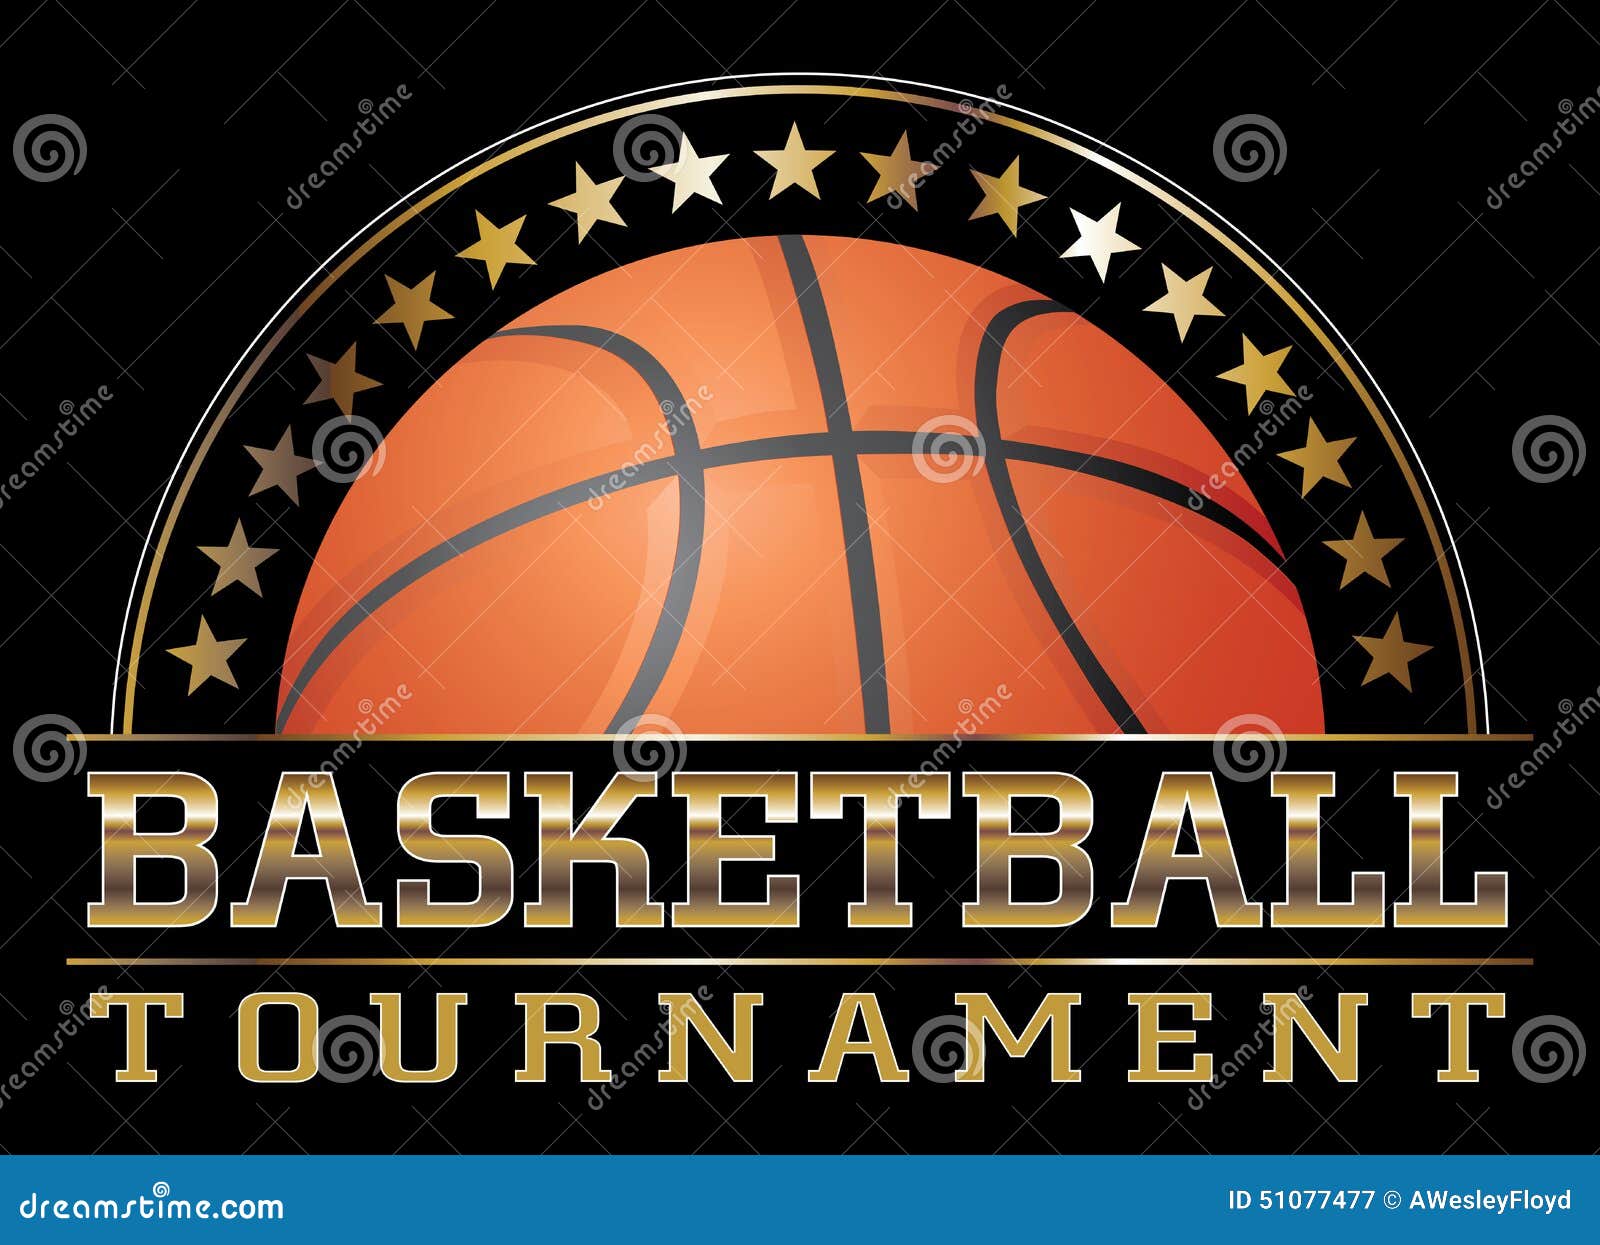 basketball tournament